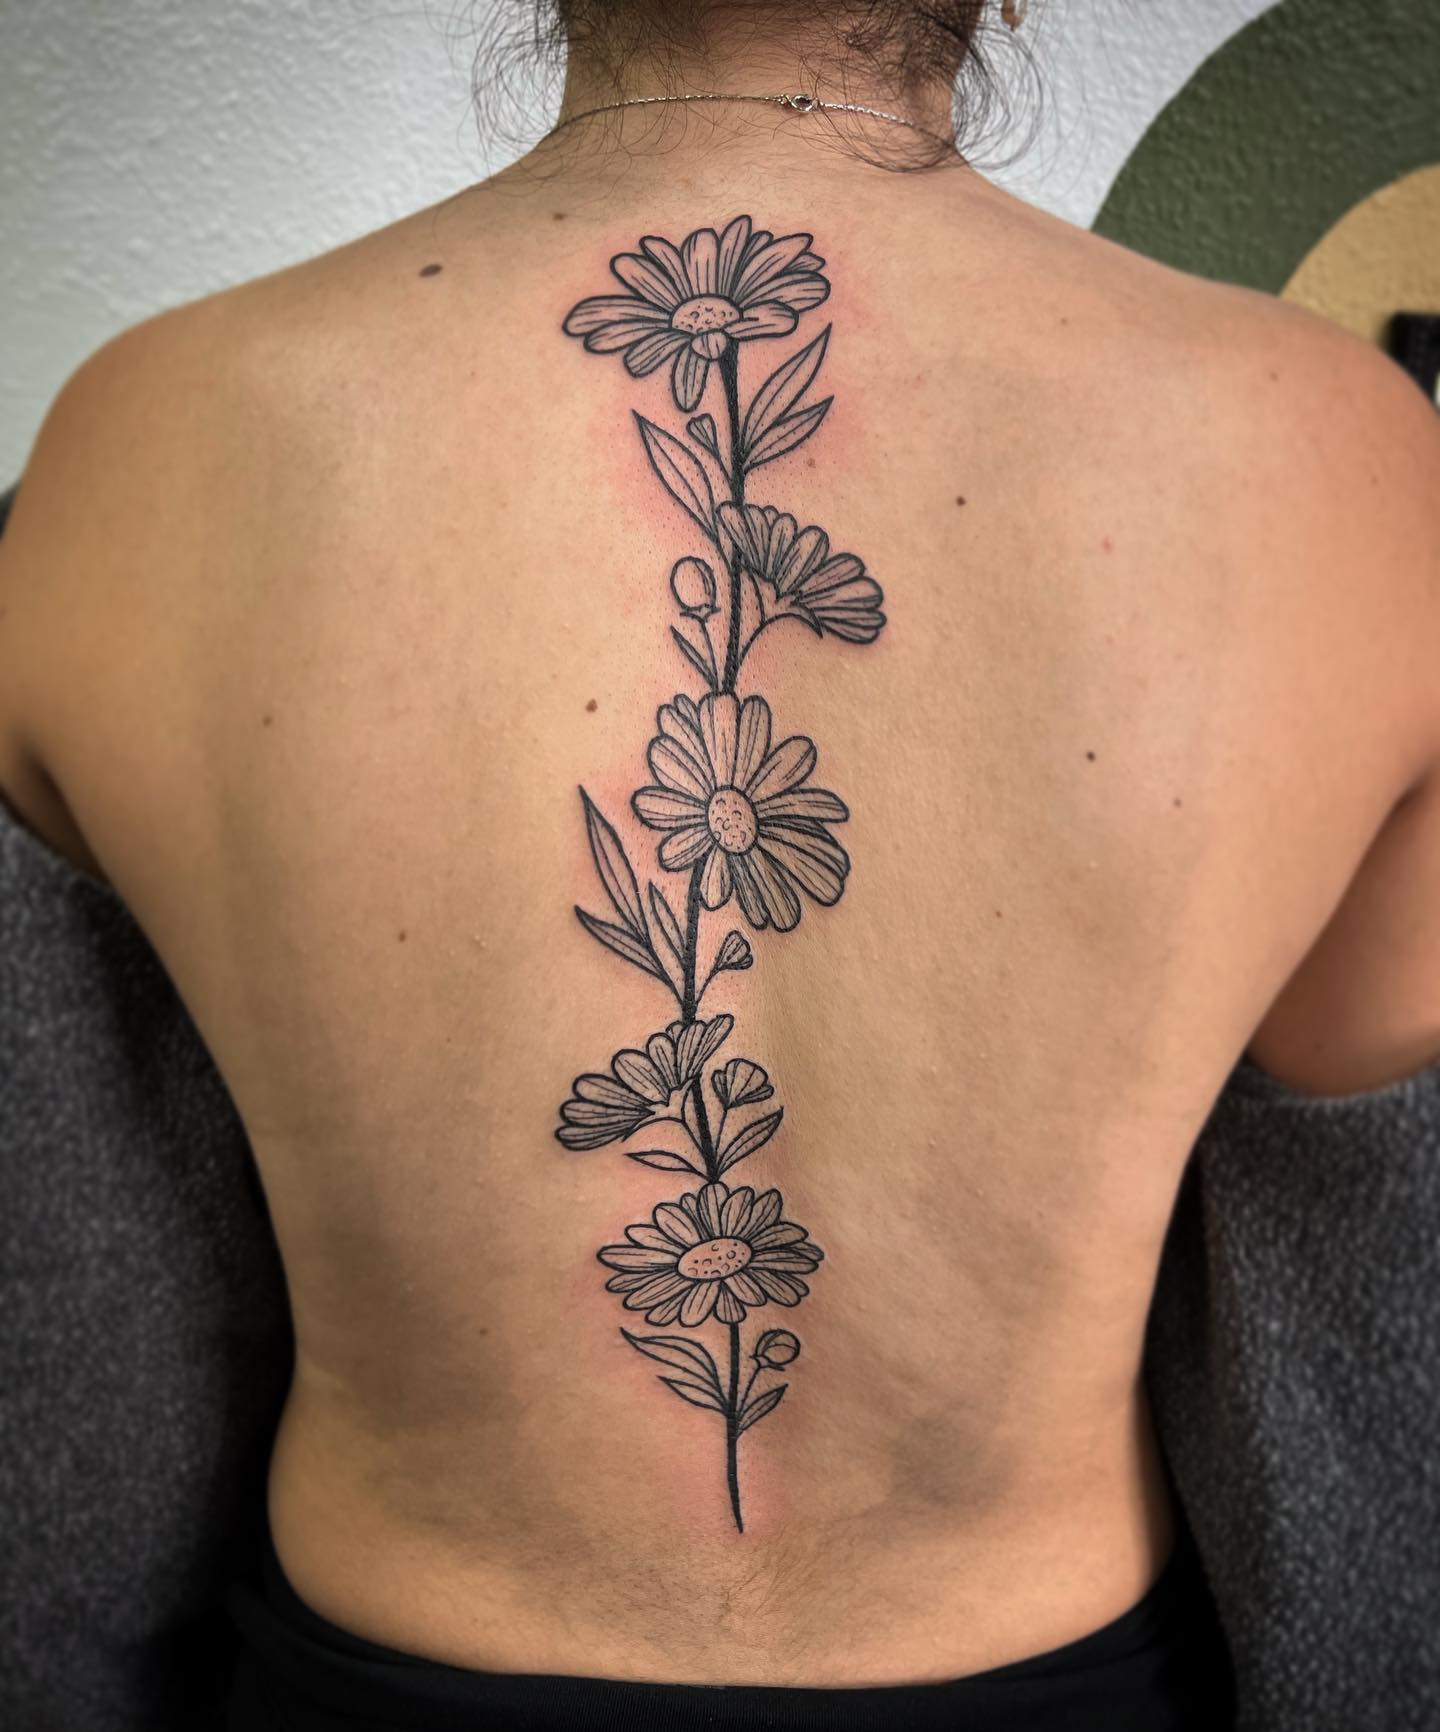 Gran tatuaje detallado de margarita en la espalda.